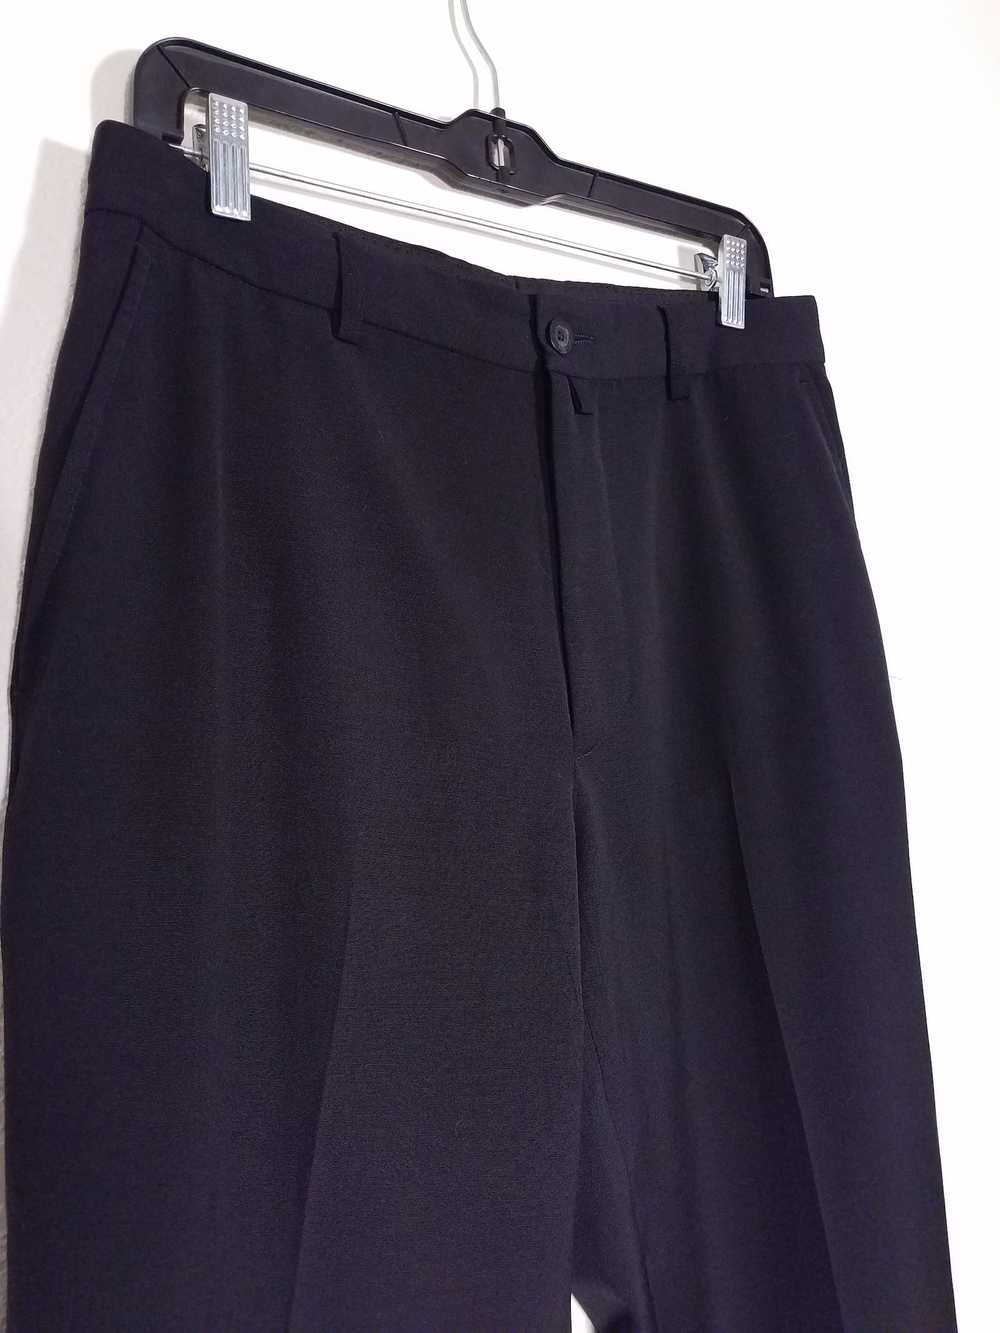 Dries Van Noten Black Pleated Dress Pants - image 2